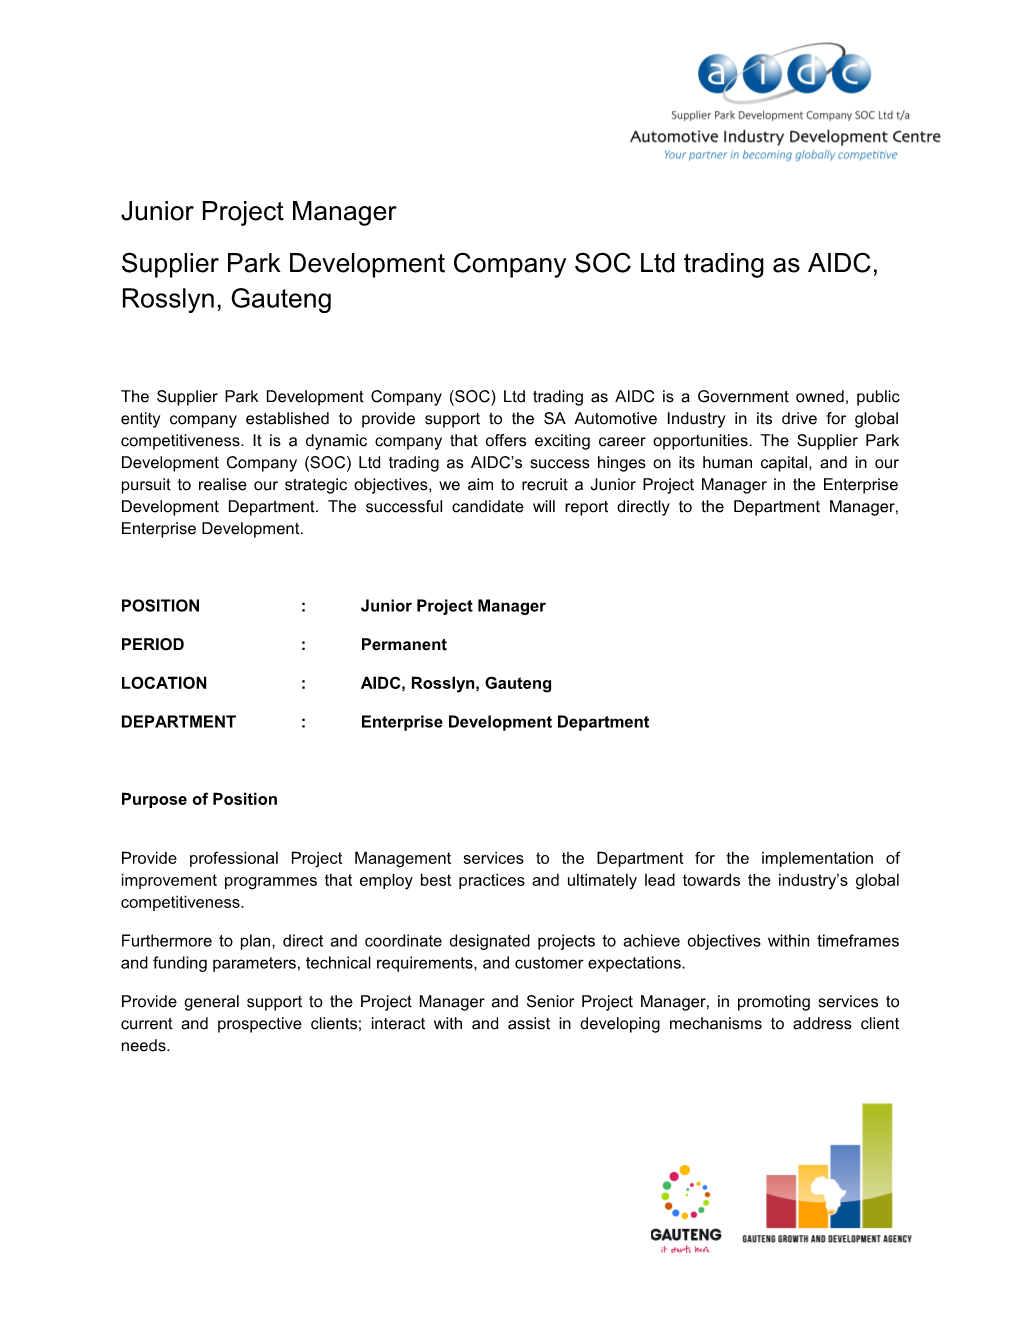 Supplier Park Development Company SOC Ltd Trading As AIDC, Rosslyn, Gauteng